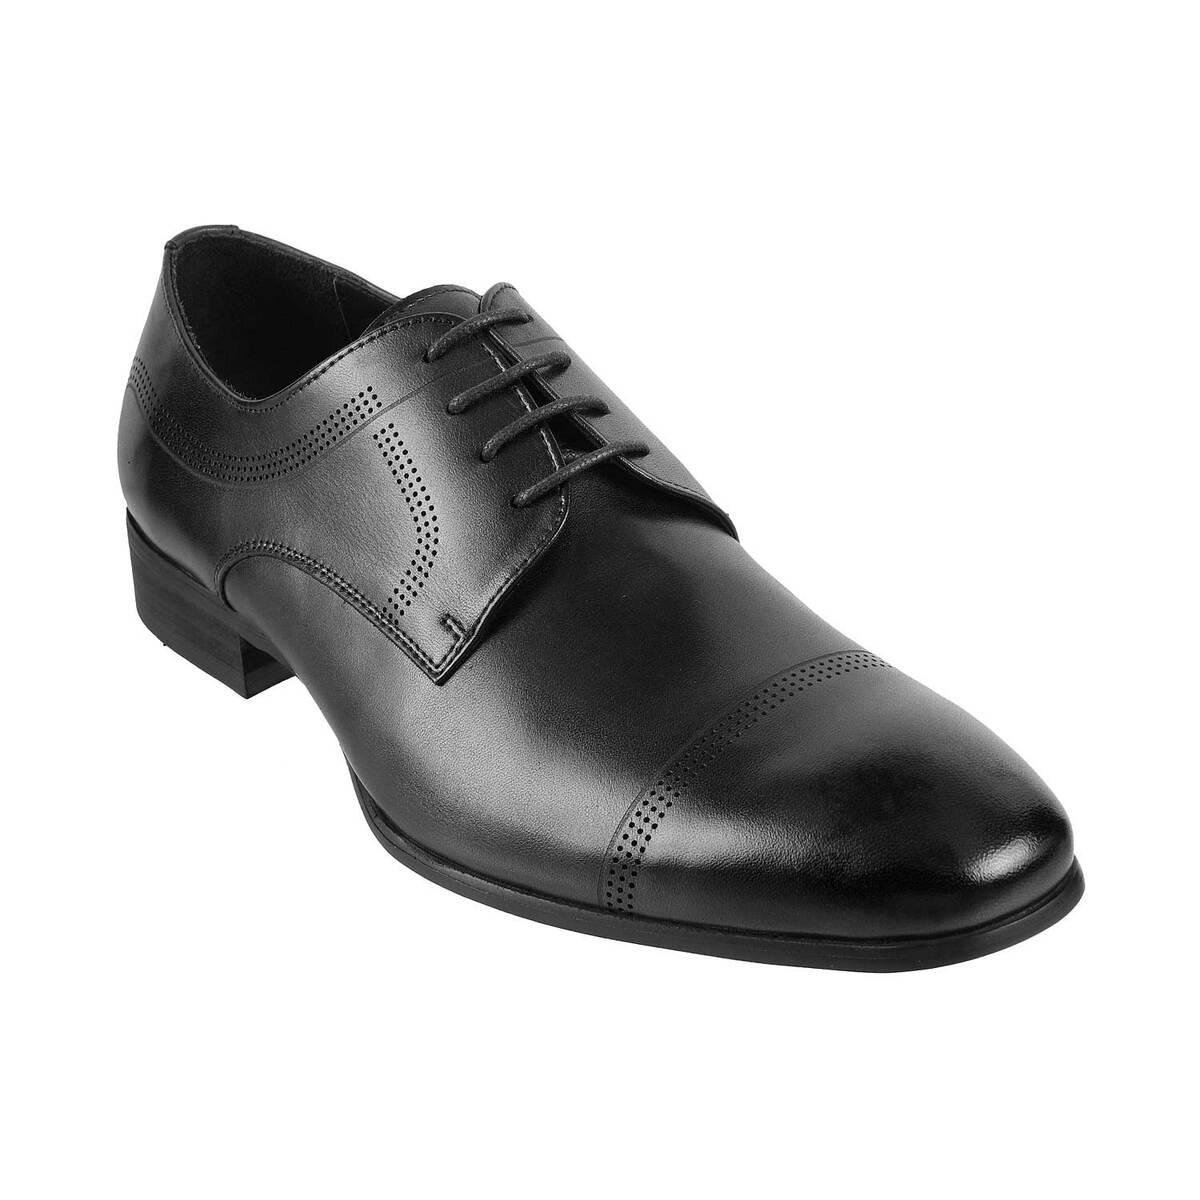 Buy Davinchi Black Formal Oxford Online | SKU:14-1123-11-40 - Metro Shoes